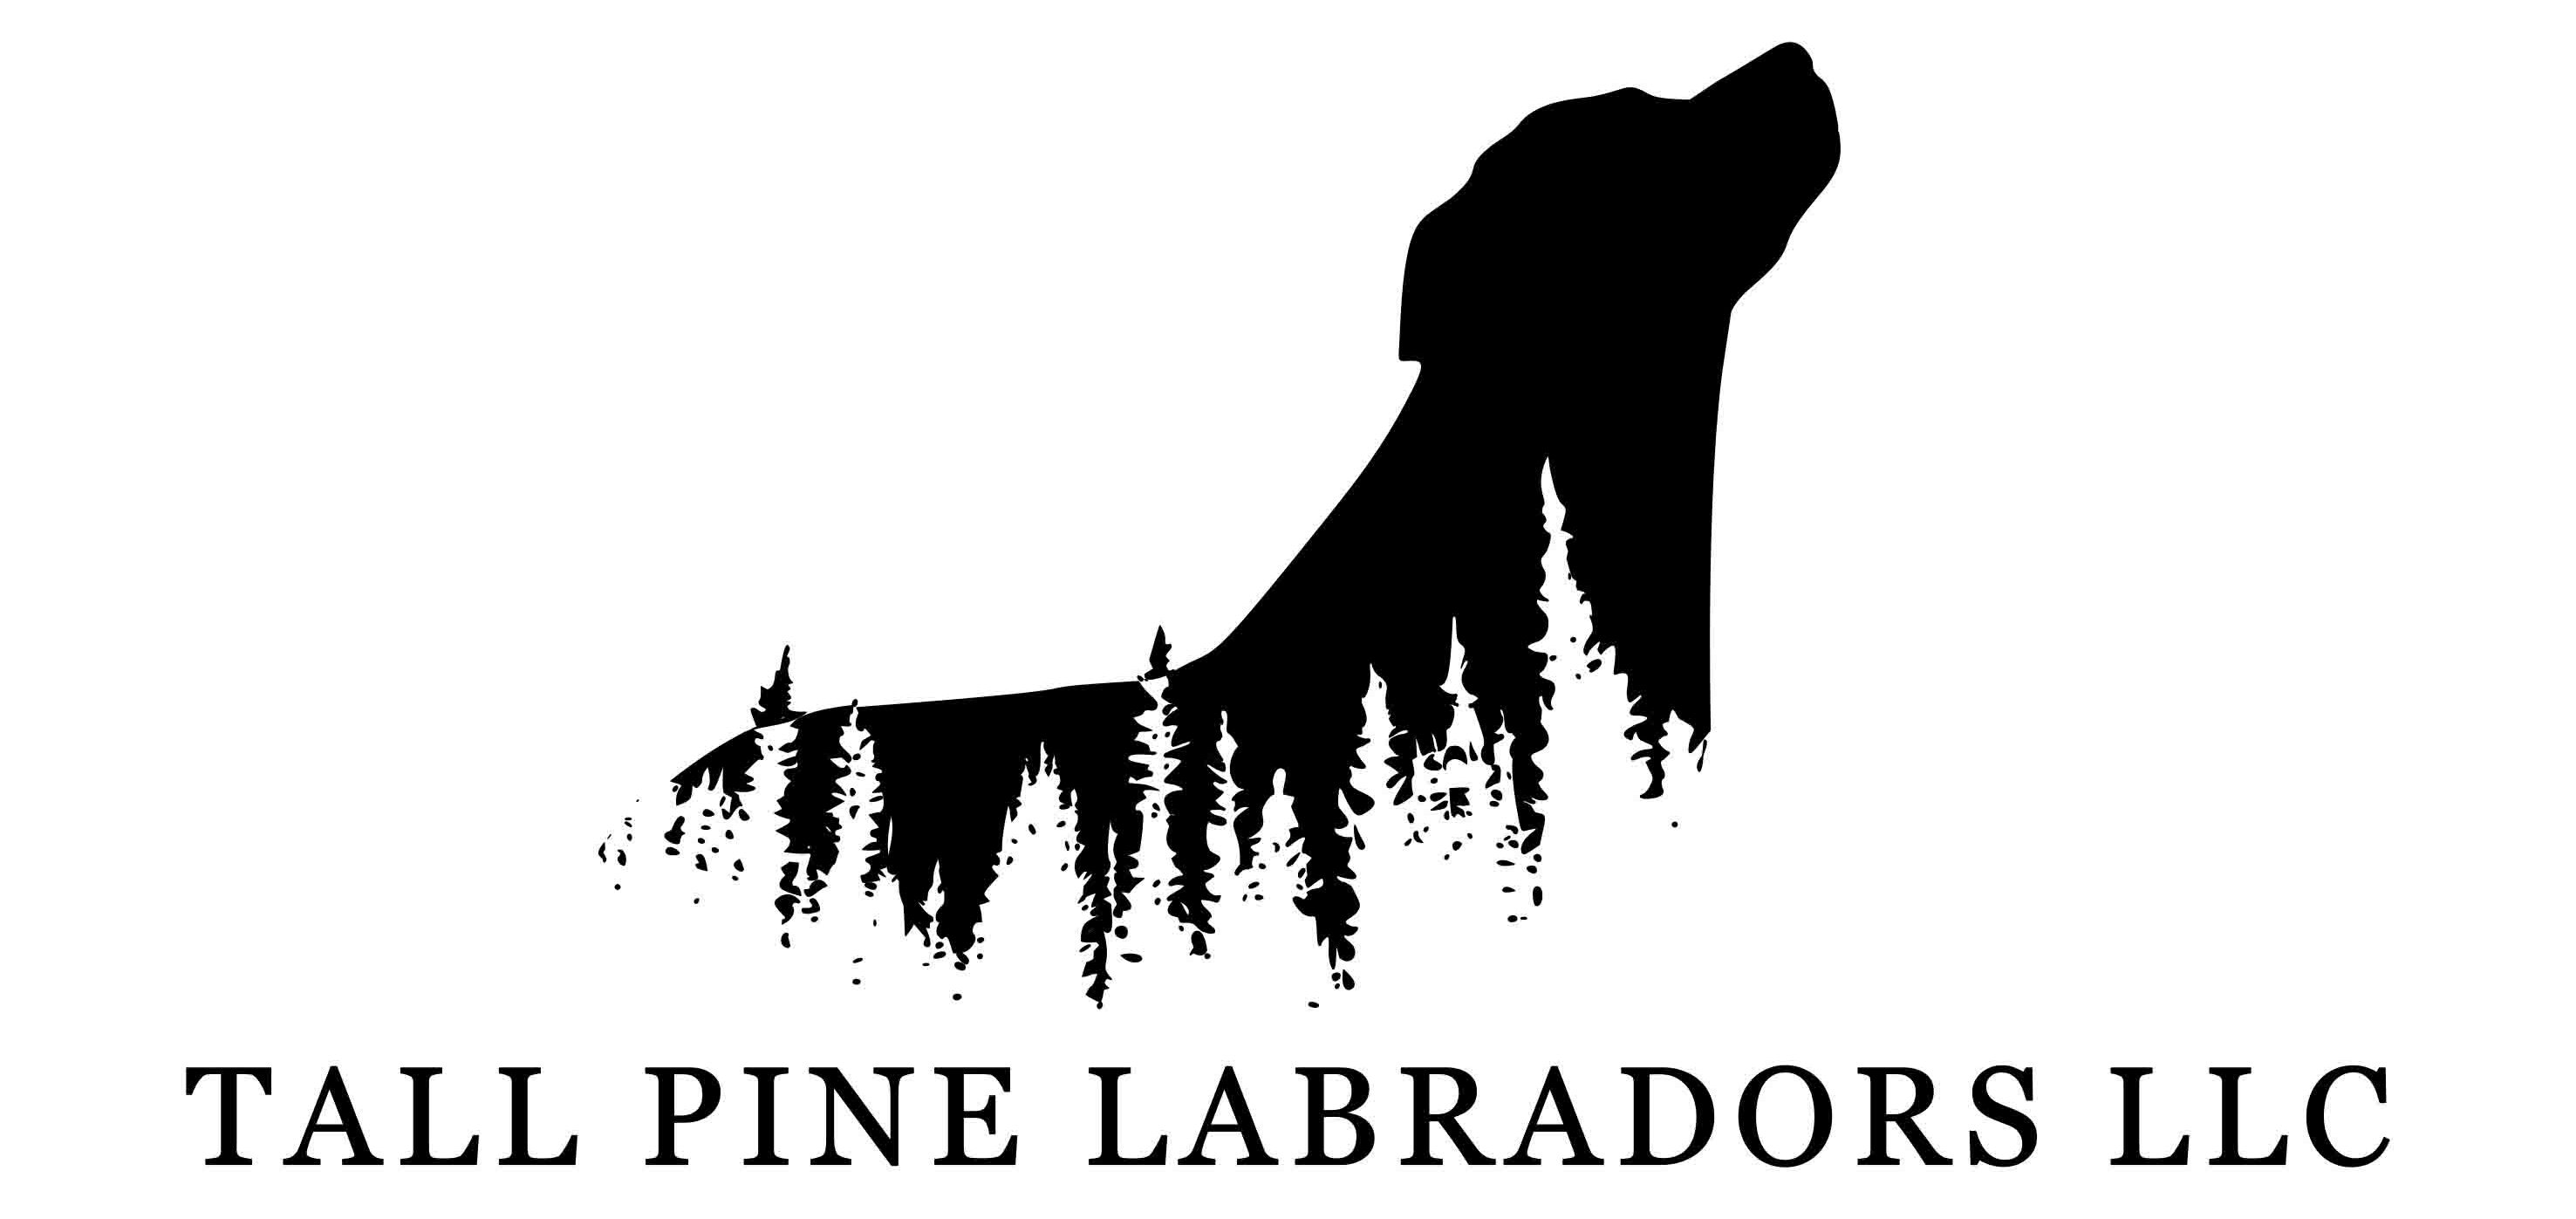 Tall Pine Labradors LLC